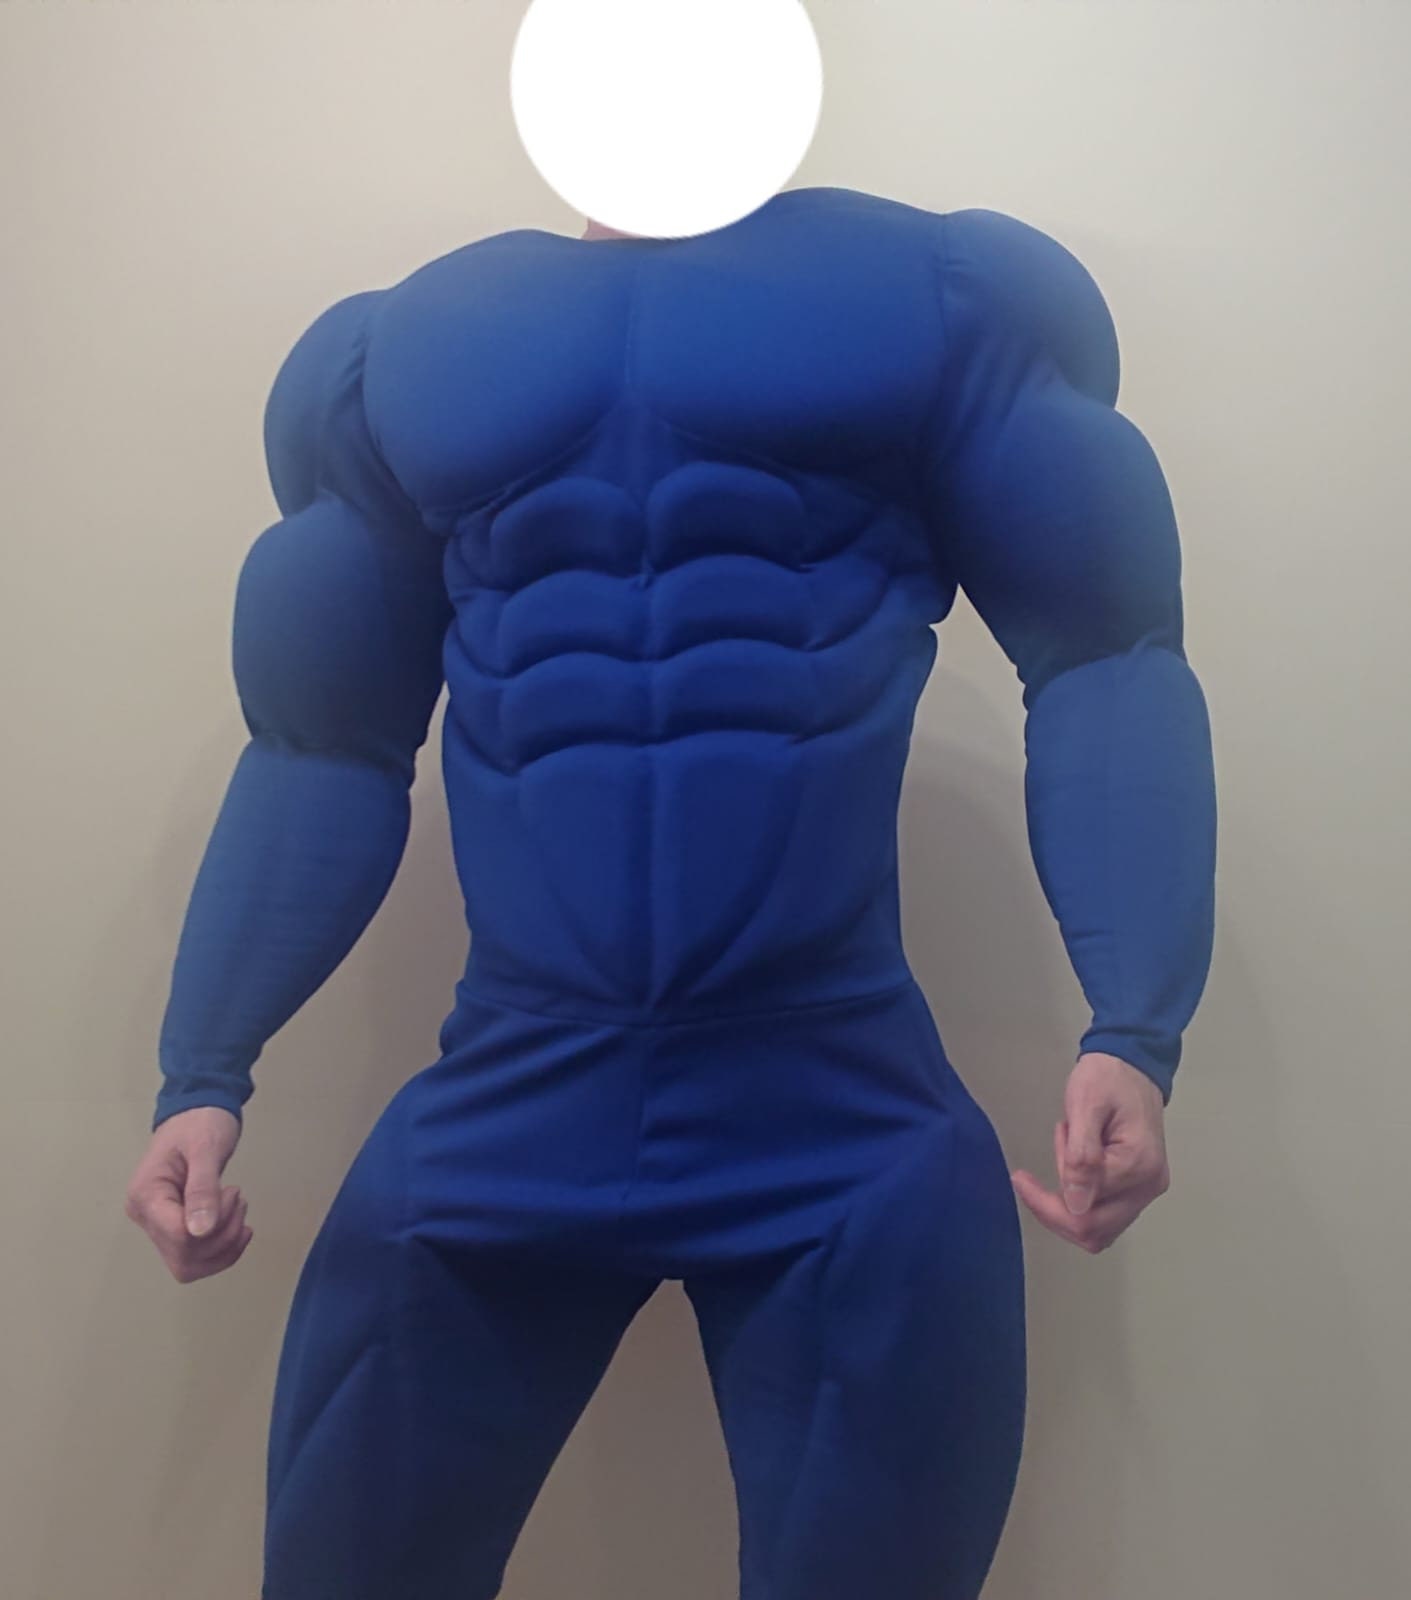 Blue Muscle Suit -  Canada